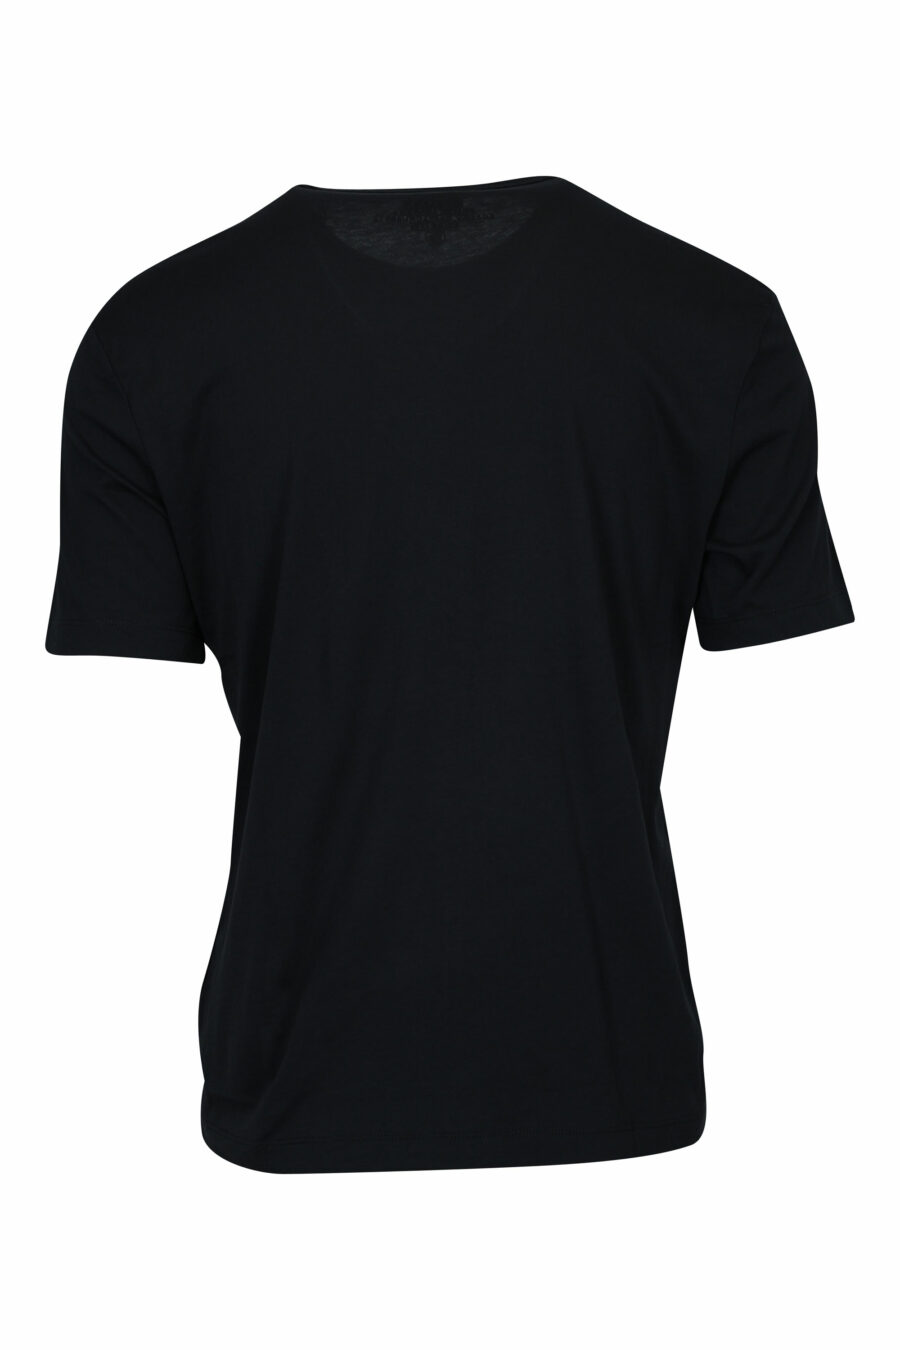 Camiseta negra con logo recuadro "spray" - 8058610800086 1